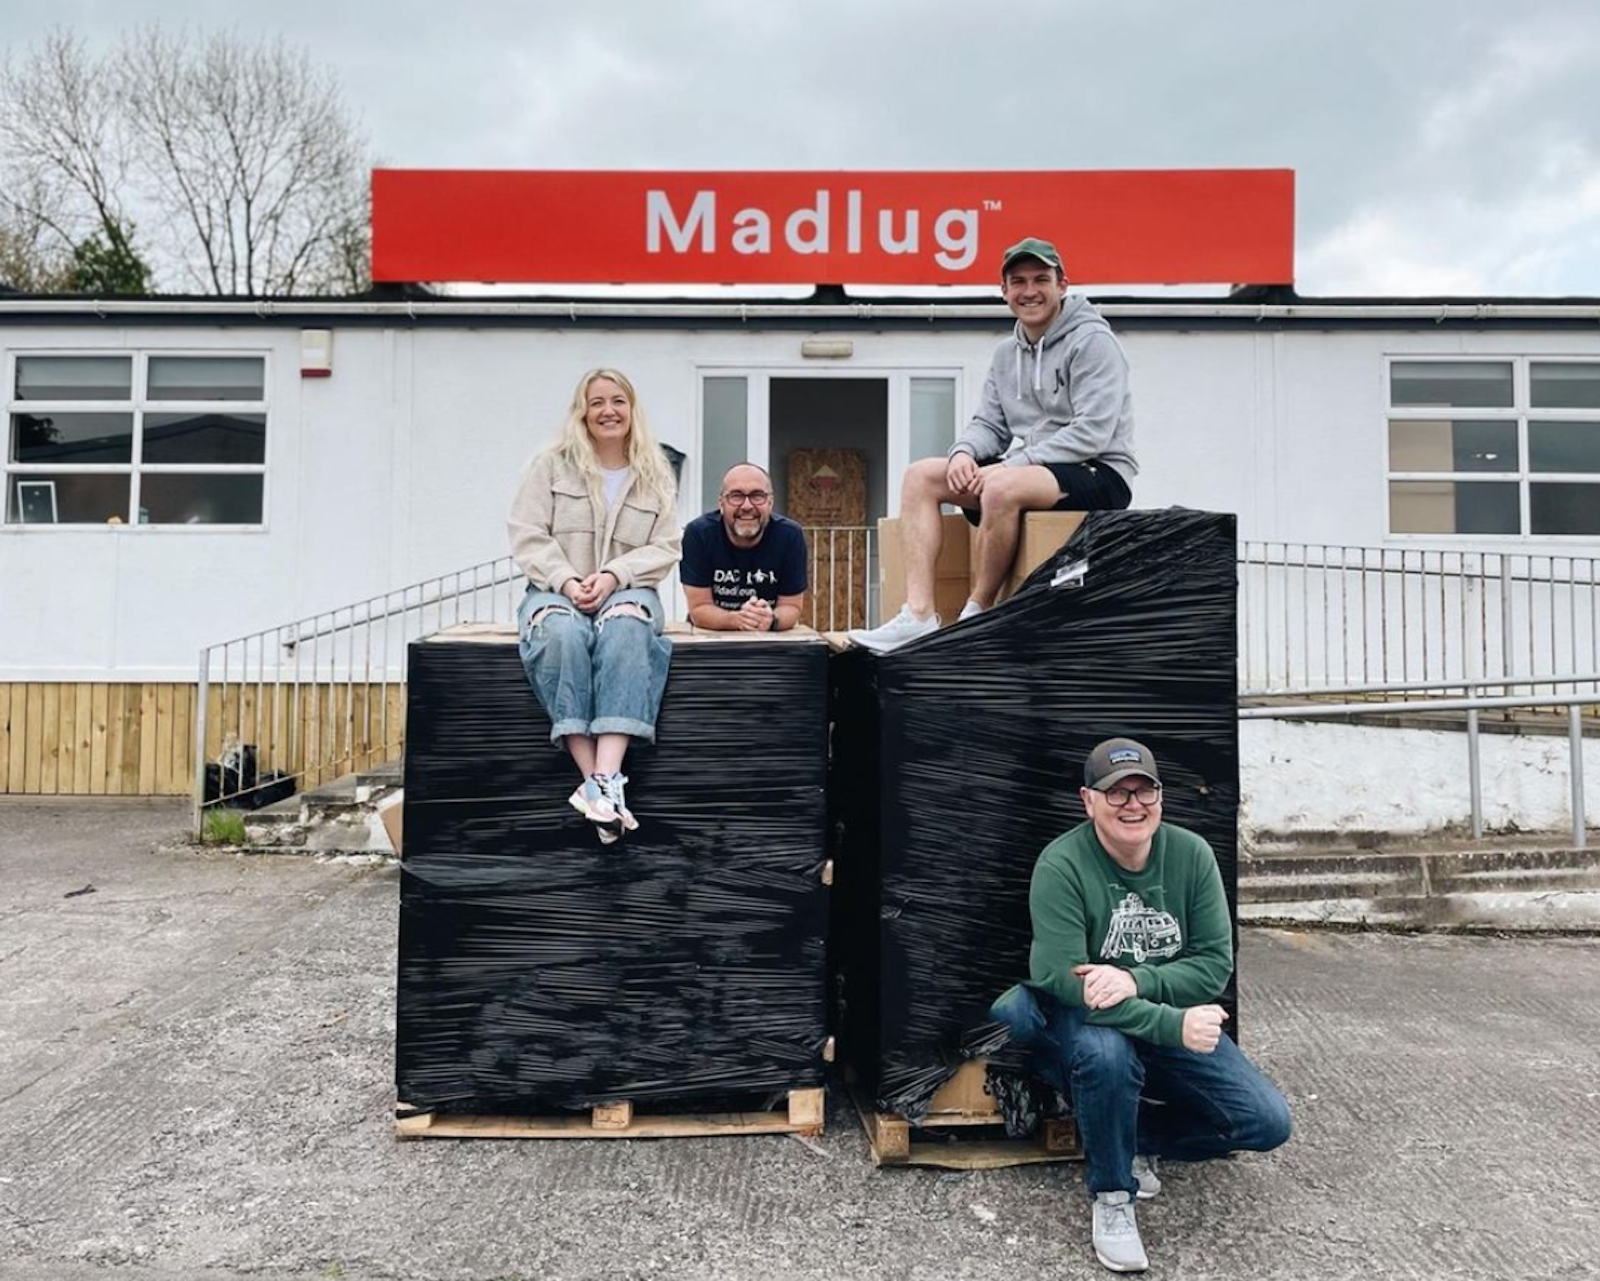 Dave Linton 和他的团队成员在北爱尔兰 Madlug 办公室外与新完成的订单货物合影。